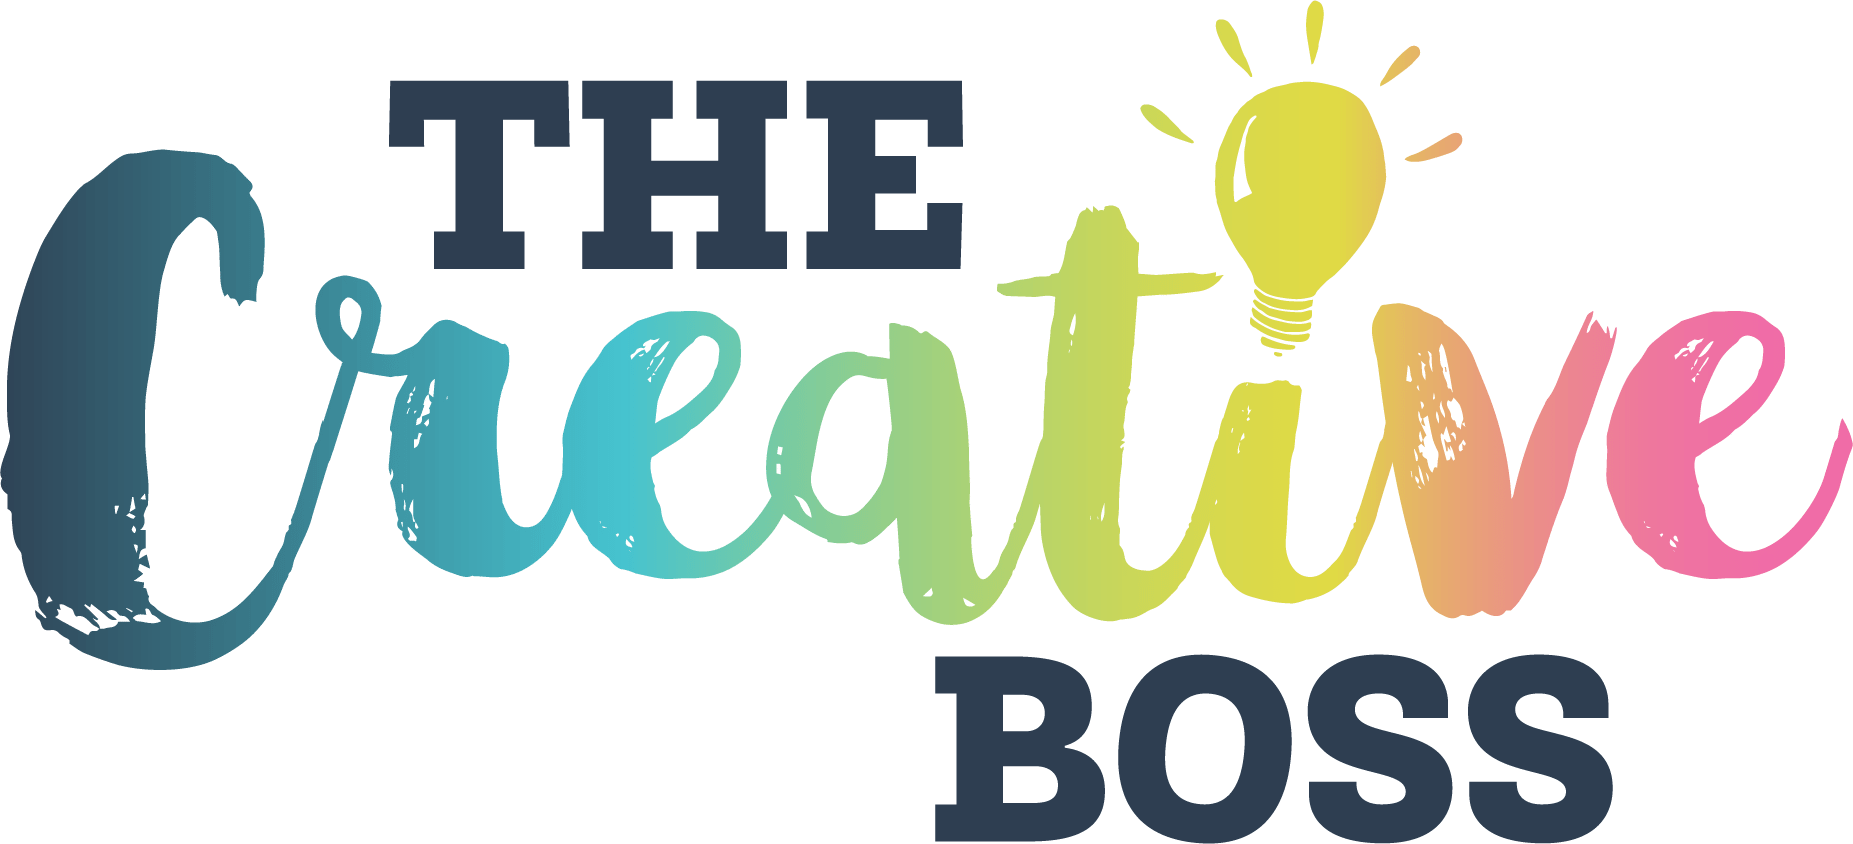 The Creative Boss - Web Design (1853x844)